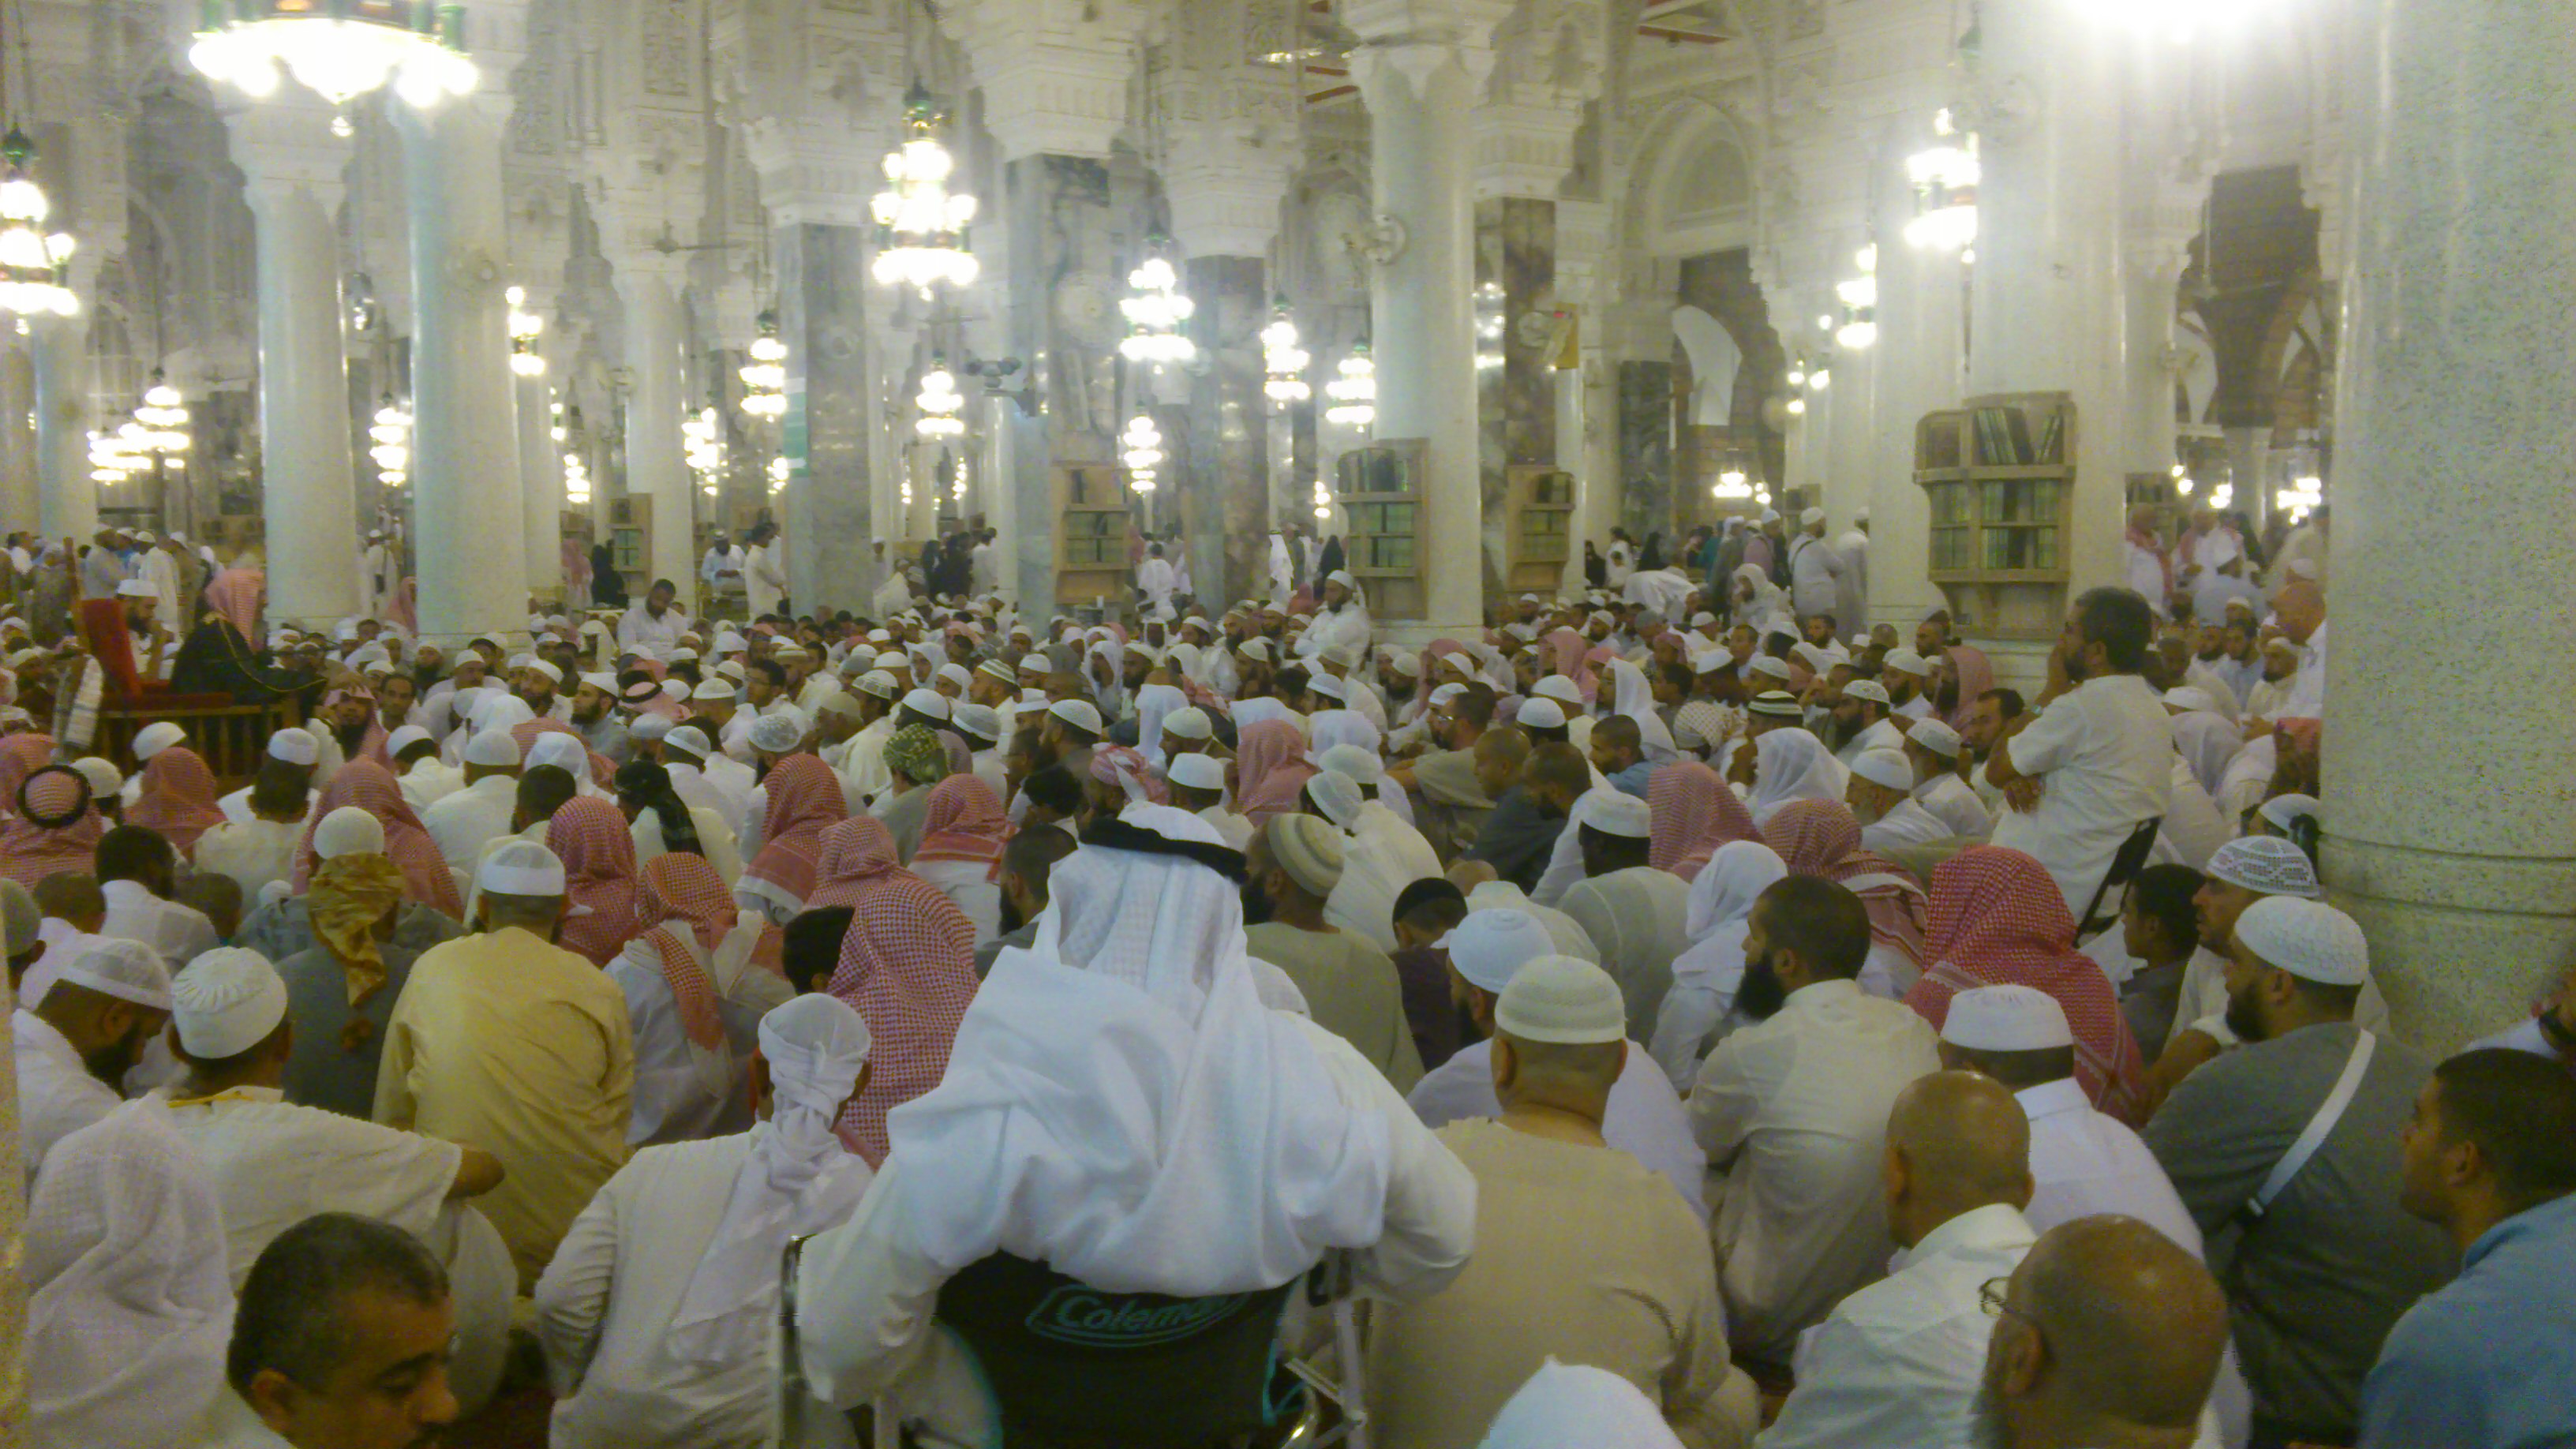 050713 – Masjidil Haram, Makkah – Sheikh Soleh bin Muhammad al 